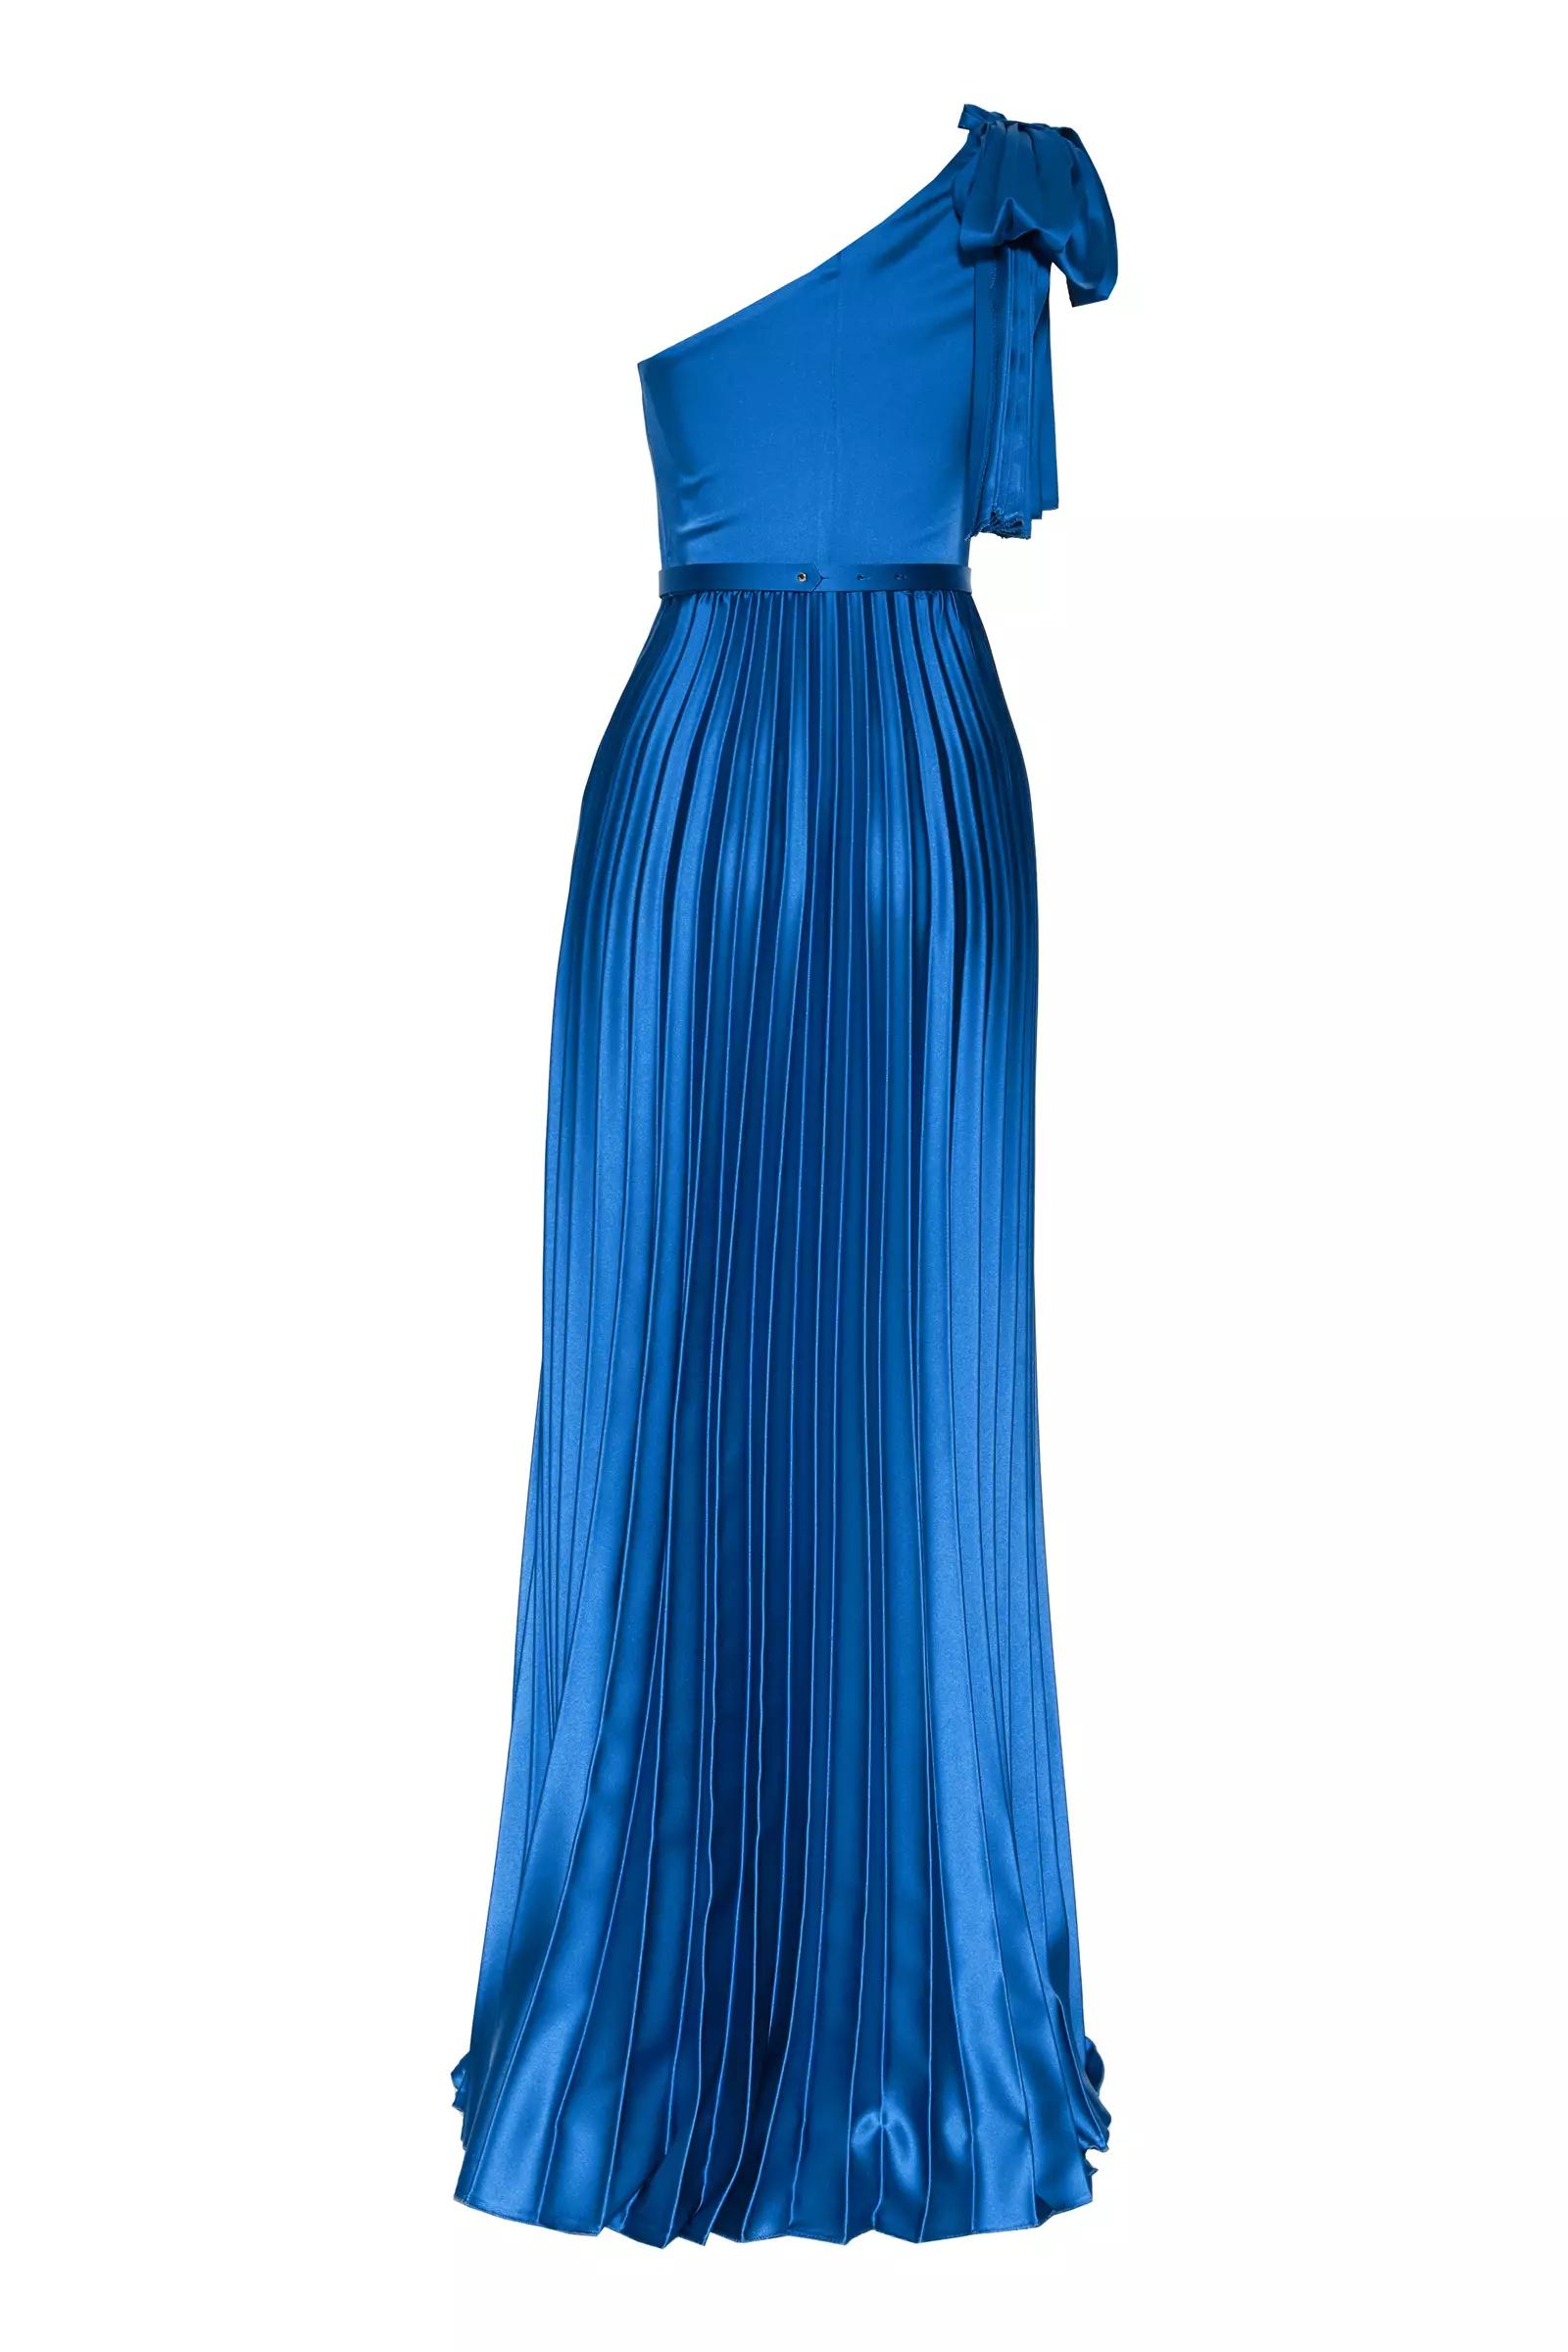 Blue satin one arm long dress